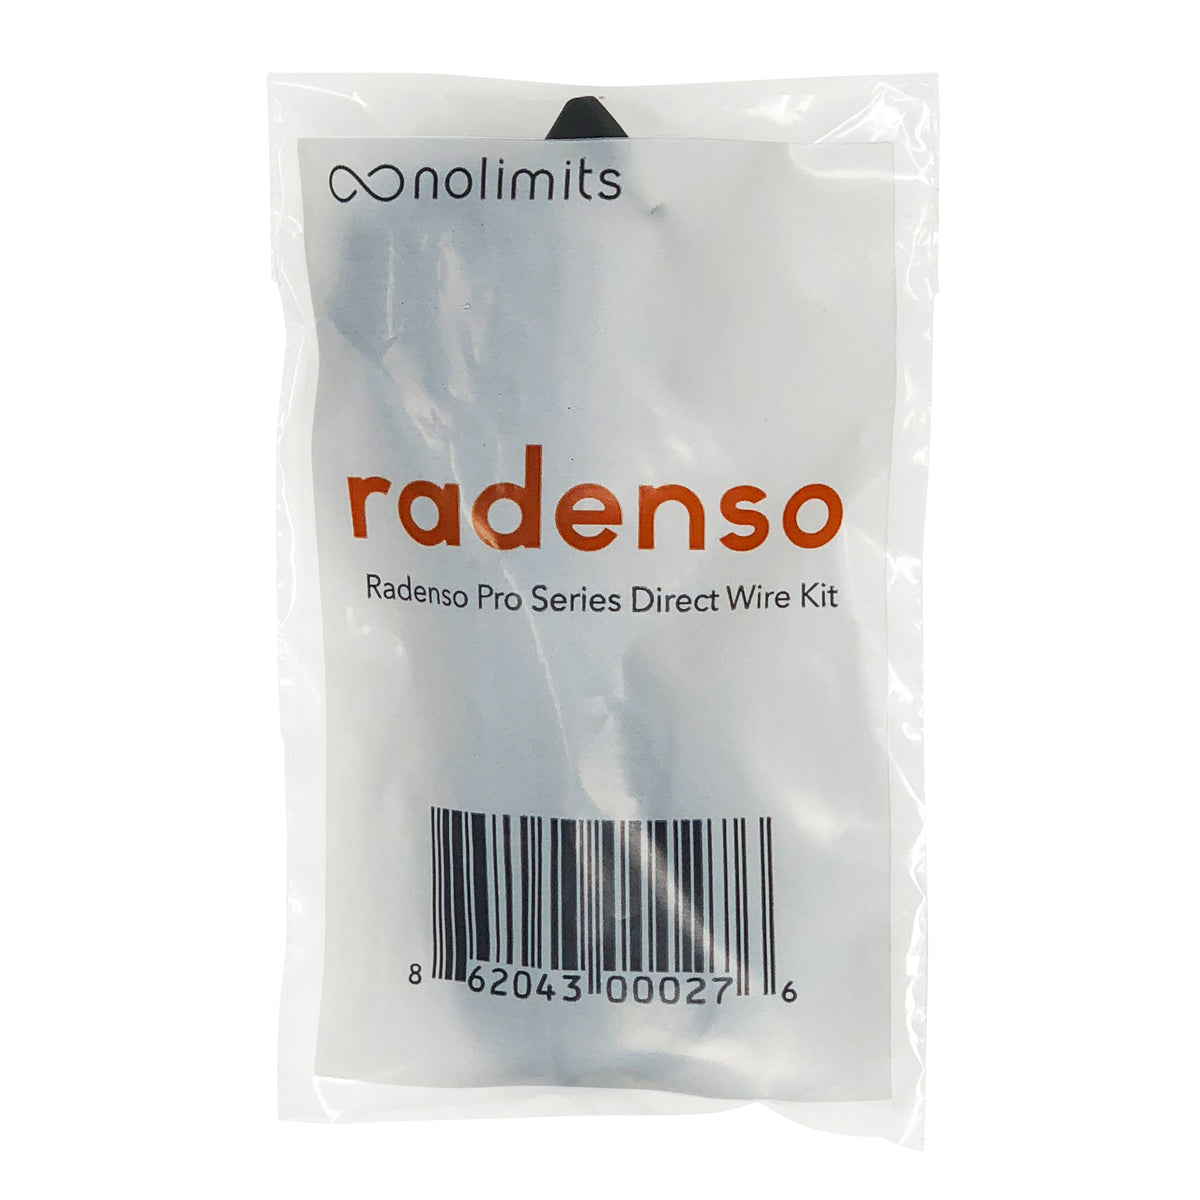 Radenso Pro Series Direct Wire Kit